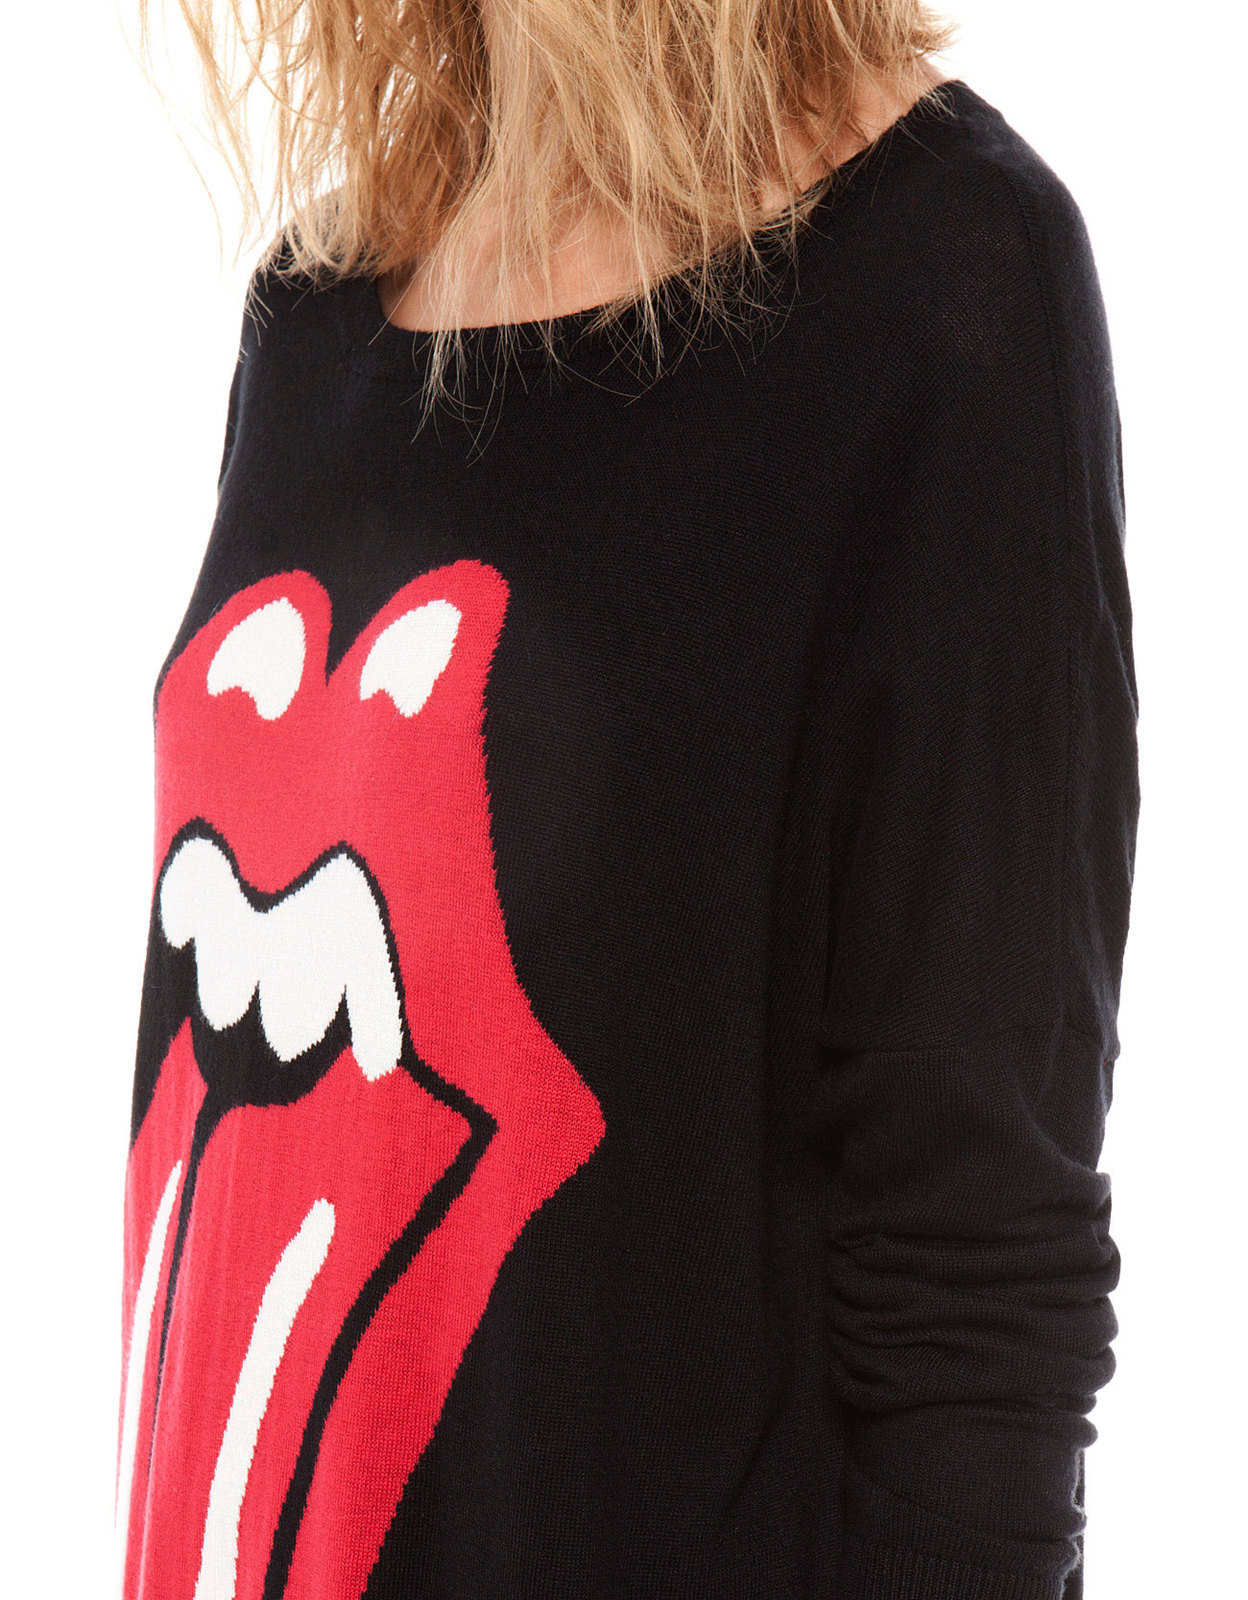 Bershka "Rolling Stones" pulóver 2013.8.8 fotója